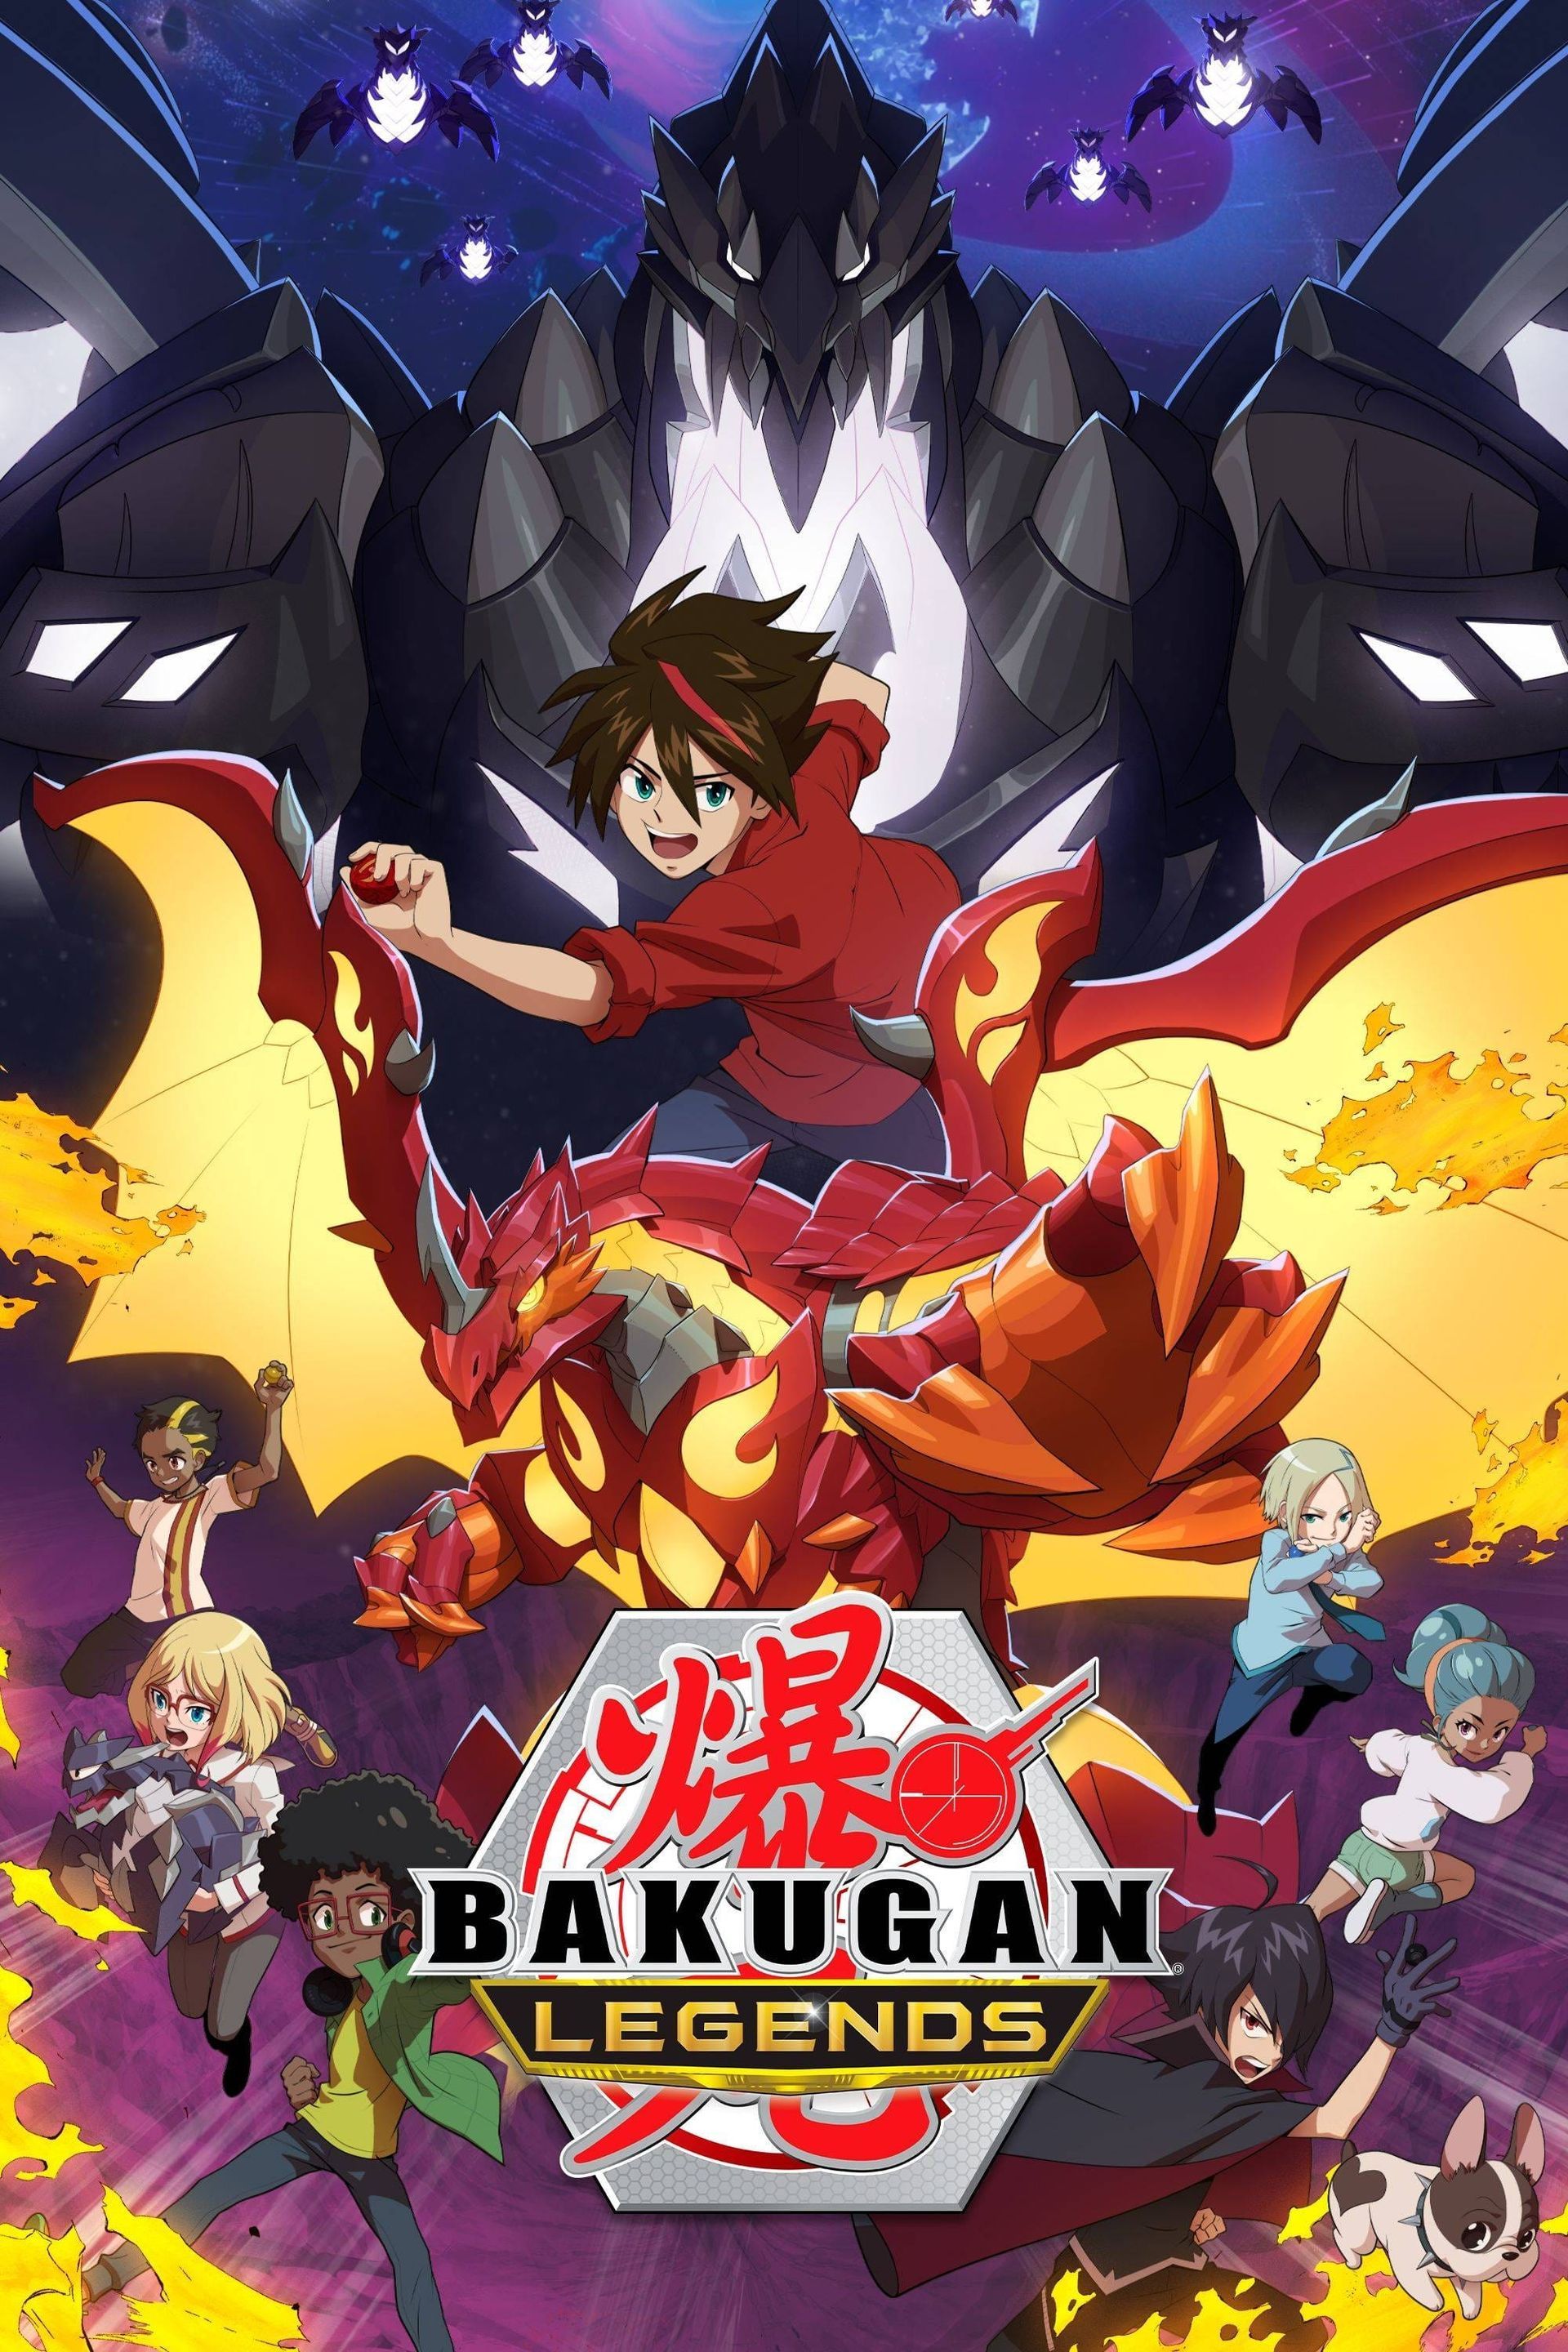 Characters appearing in Bakugan: Geogan Rising Anime